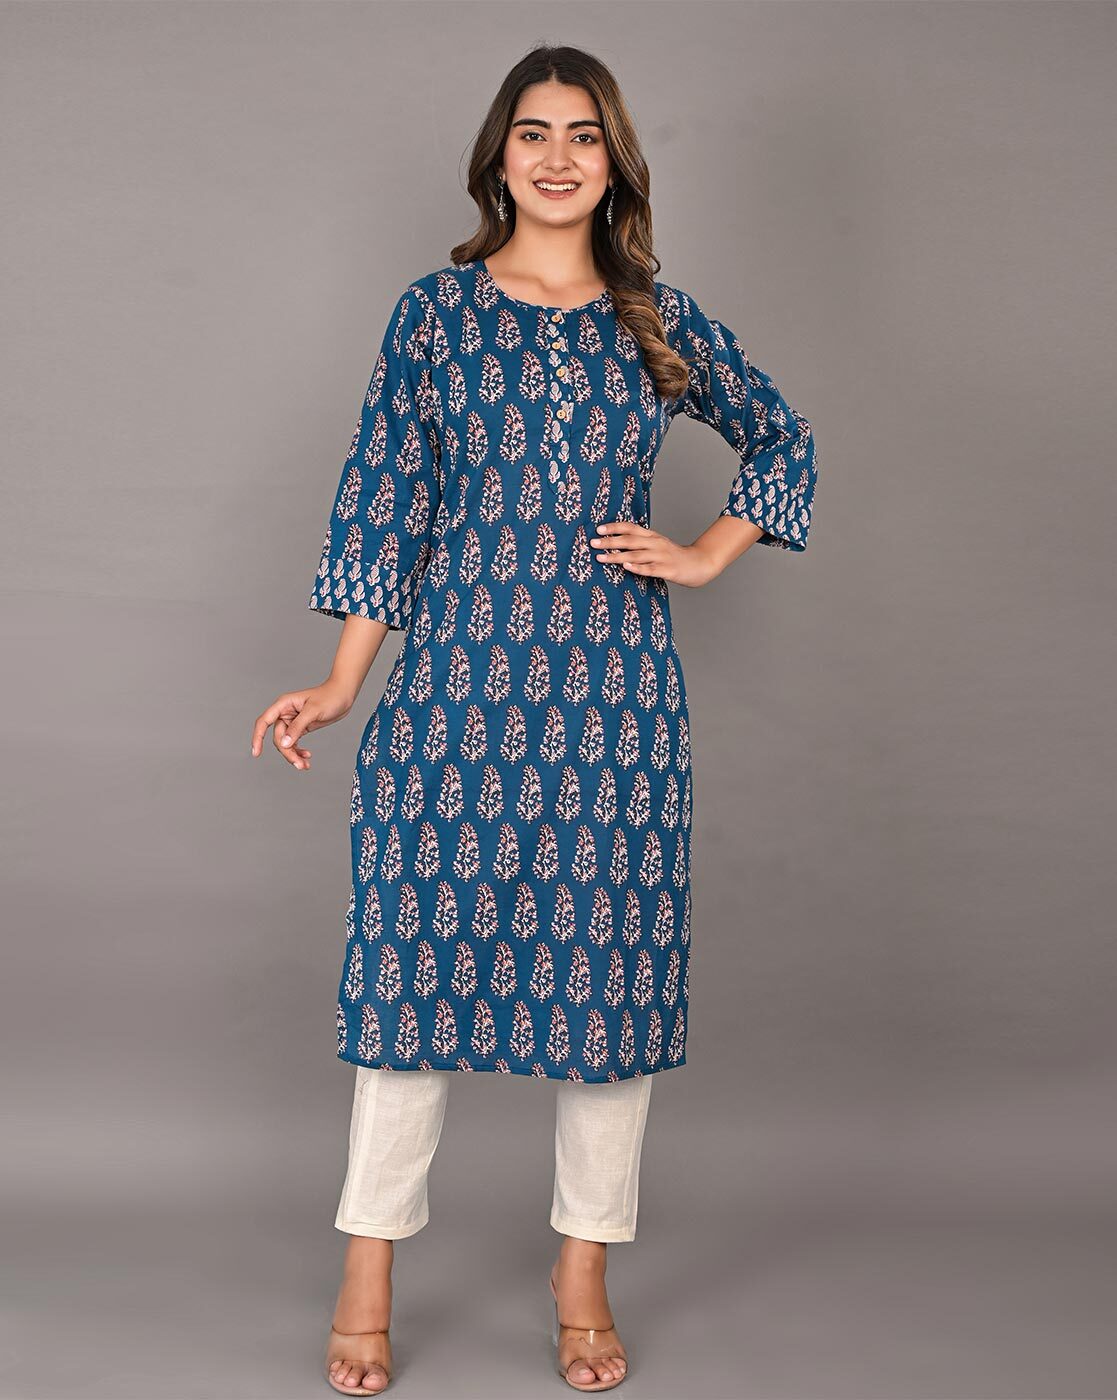 The Indian Ethnic Co. Harshi Dabu Indigo Cotton Short Kurti – Nykaa Fashion